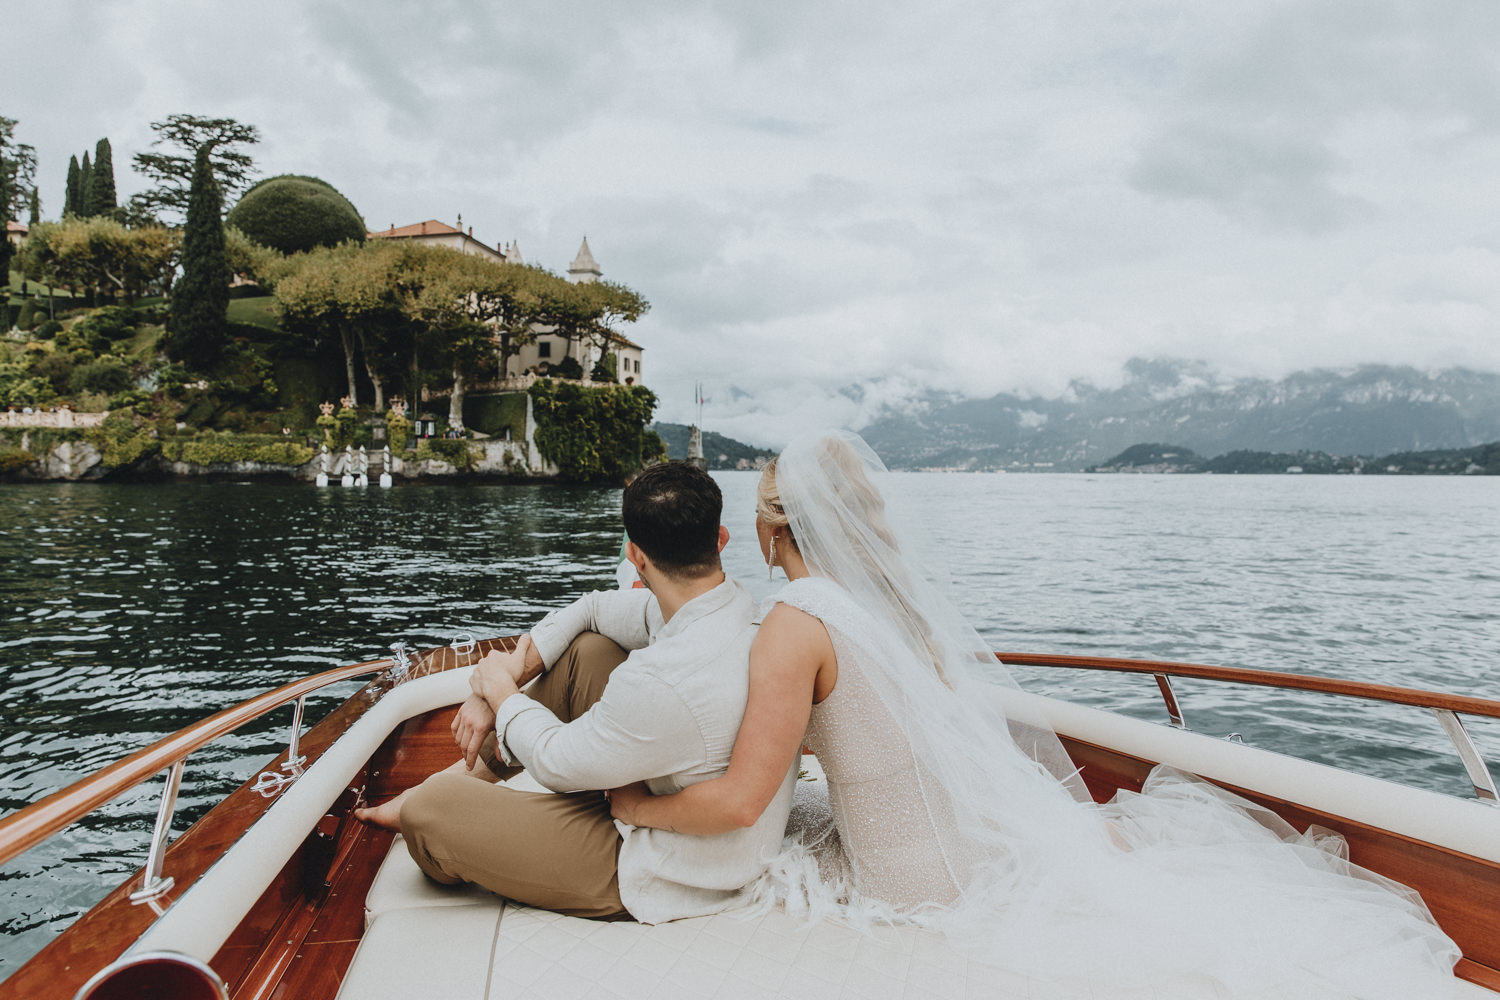 A couple in wedding attire sit on the back of a boat on Lake Como cuddling in front of the impressive Villa del Balbianello